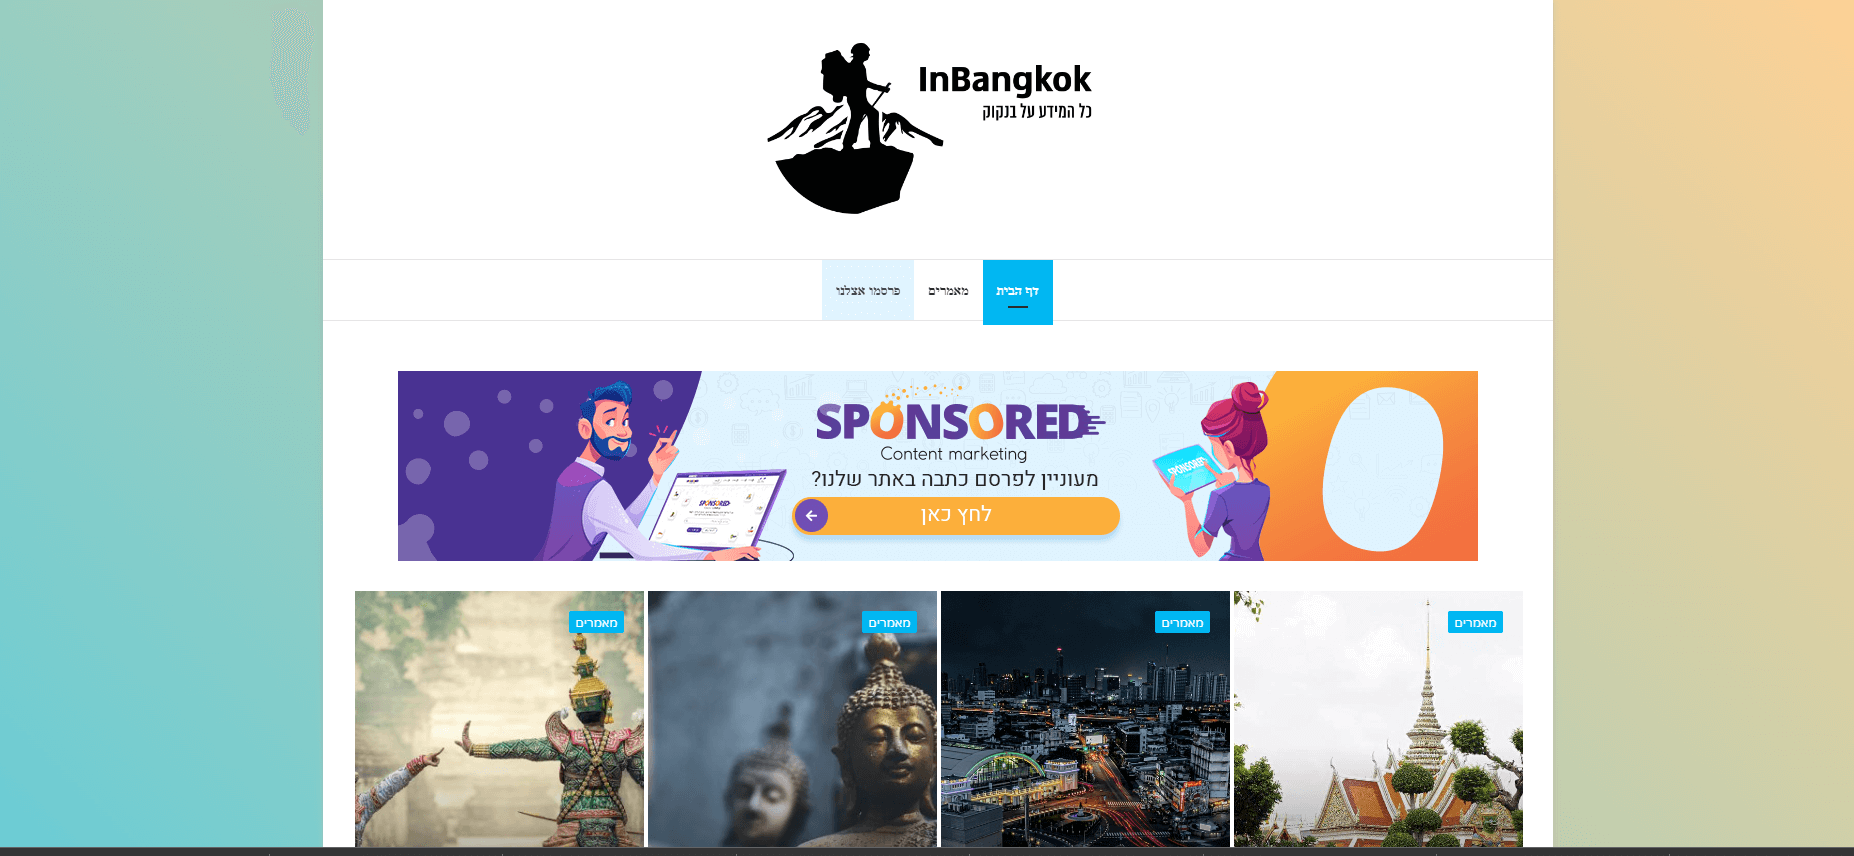 inbangkok - כל המידע על בנגקוק